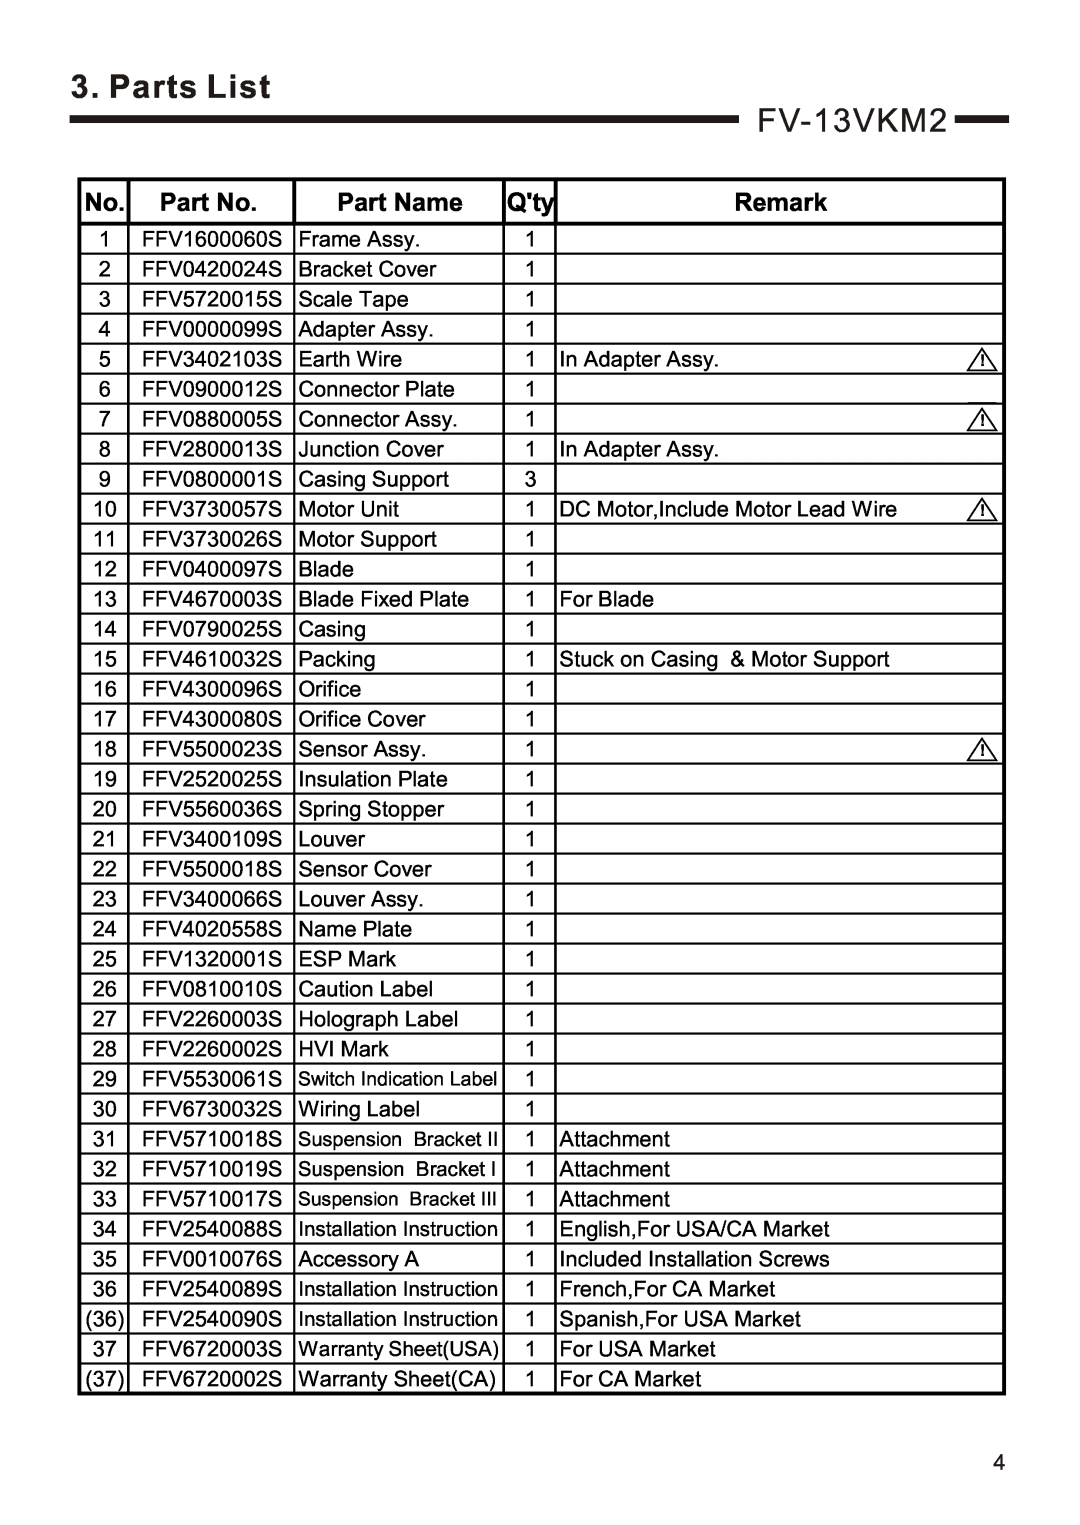 Panasonic FV-13VKM2, FV-13VKS2 service manual Parts List, Part Name, Remark 